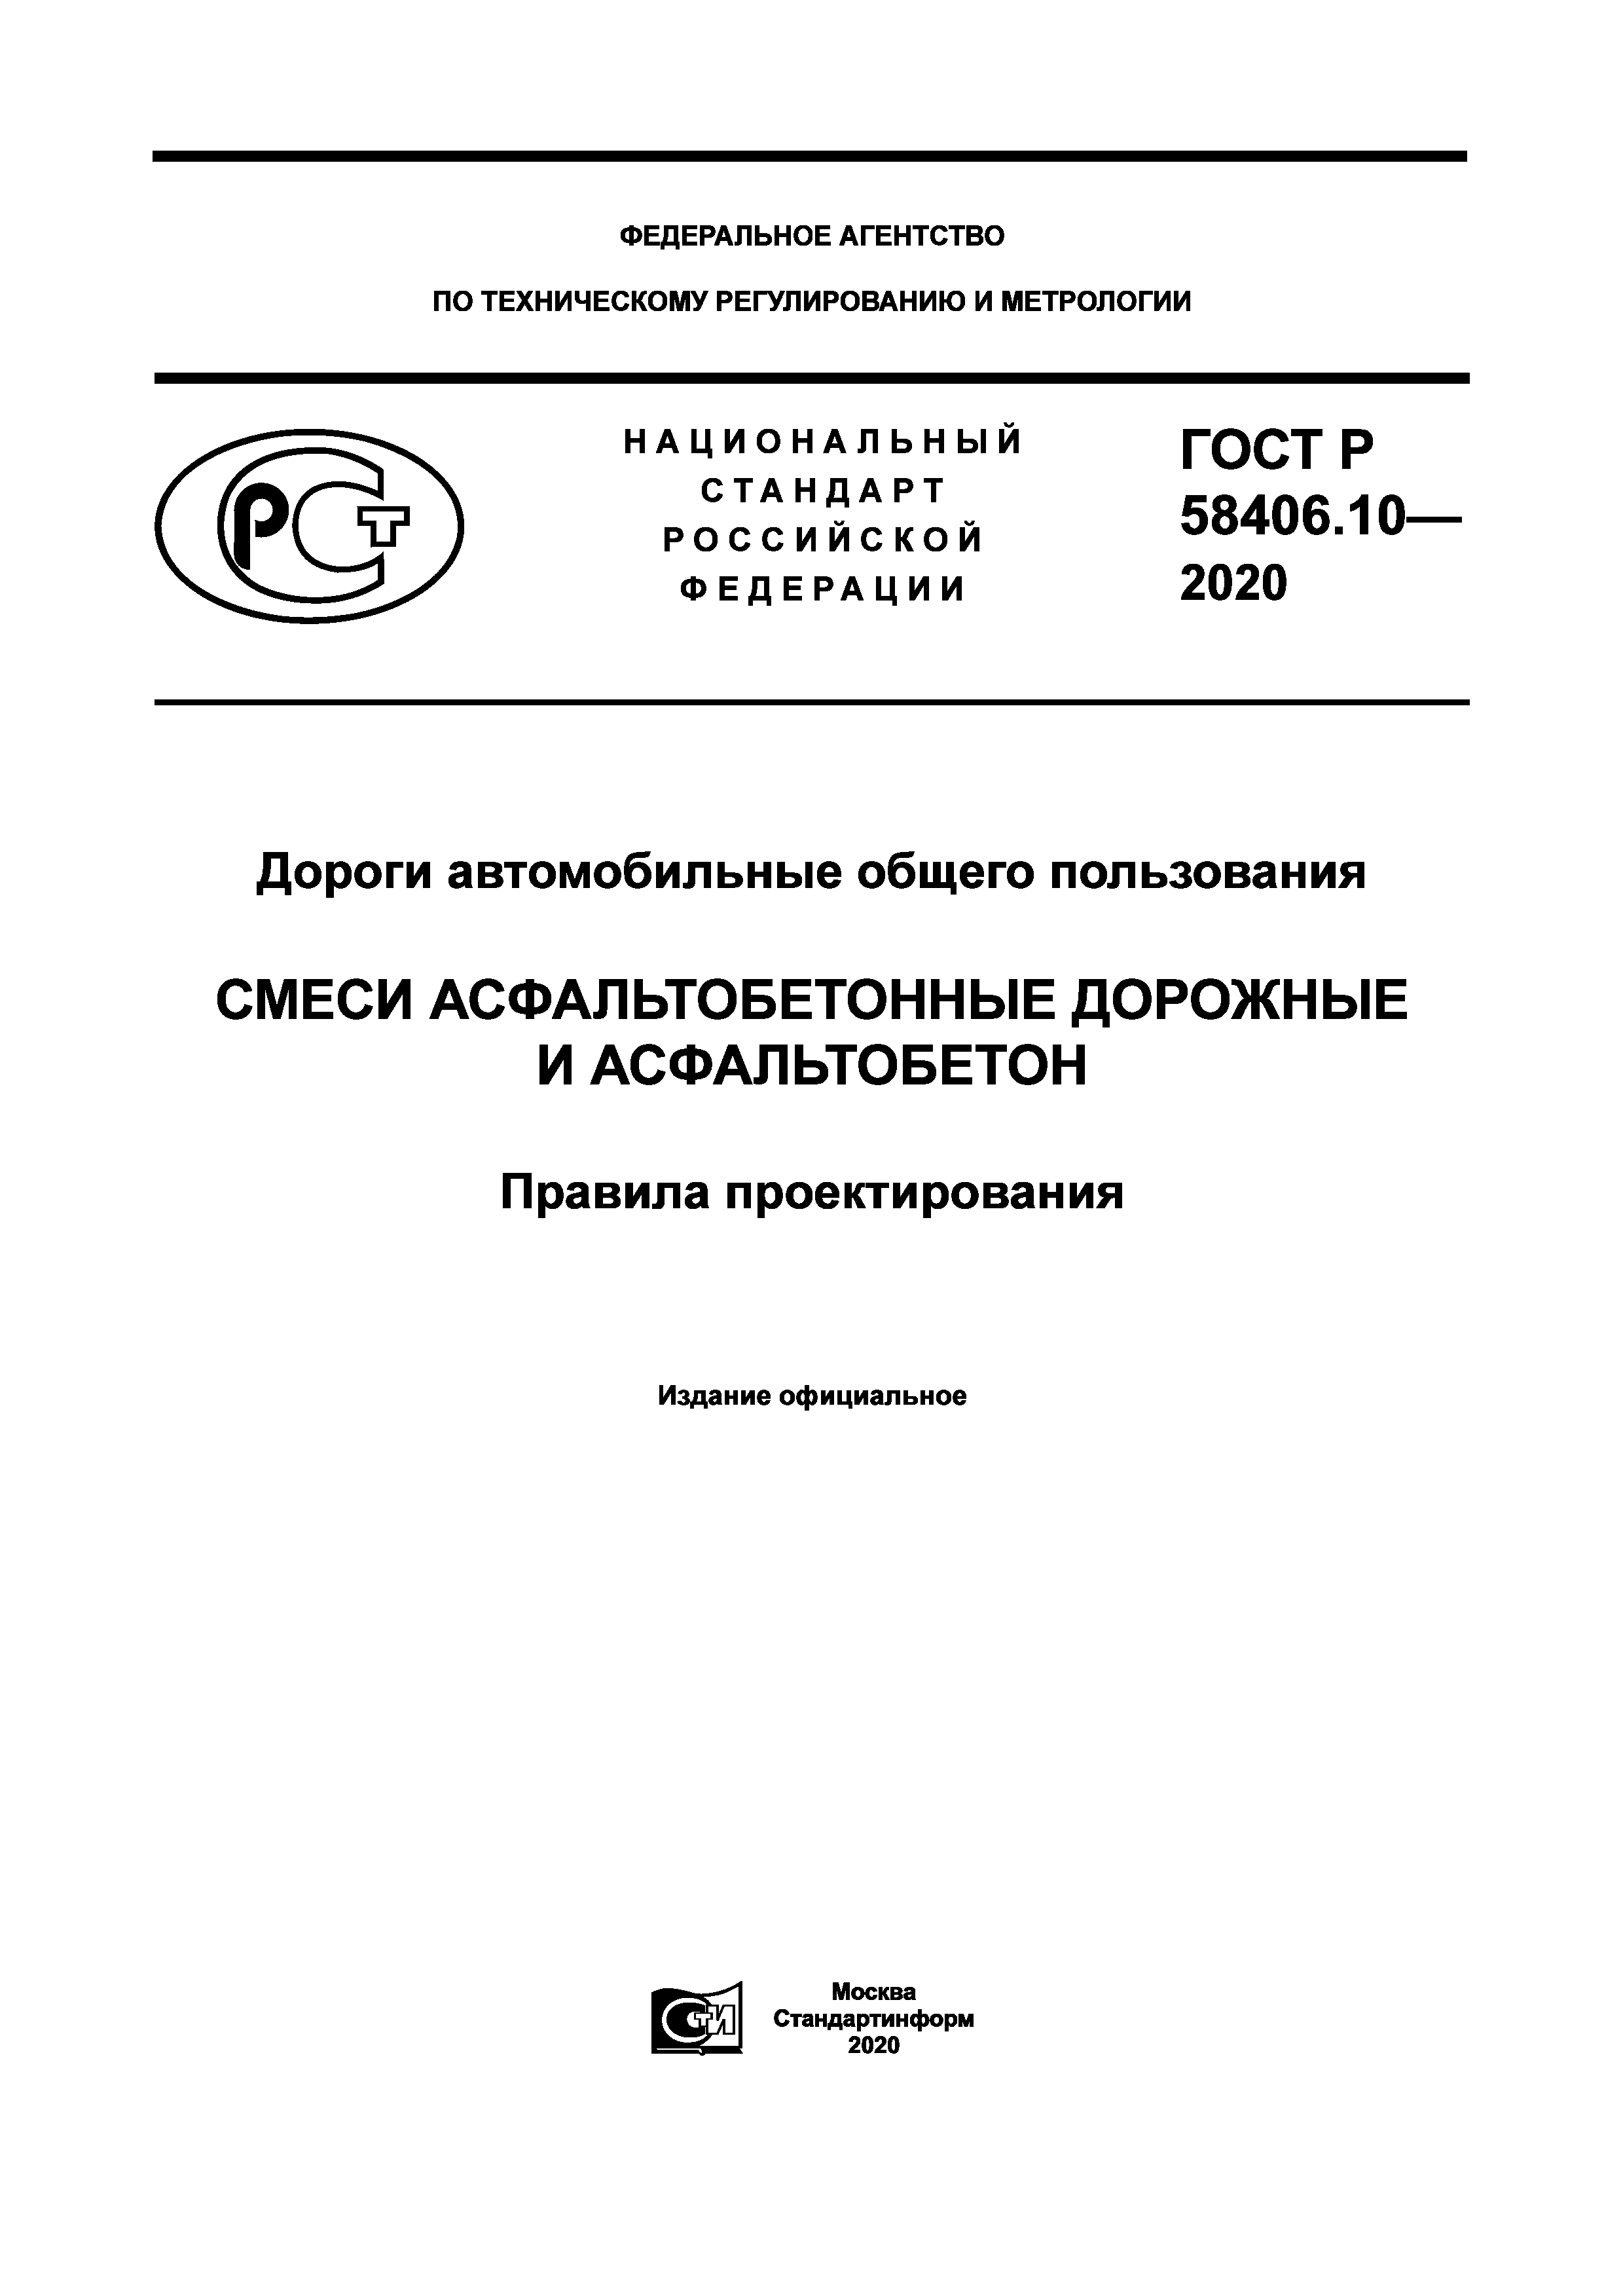 ГОСТ Р 58406.2-2020